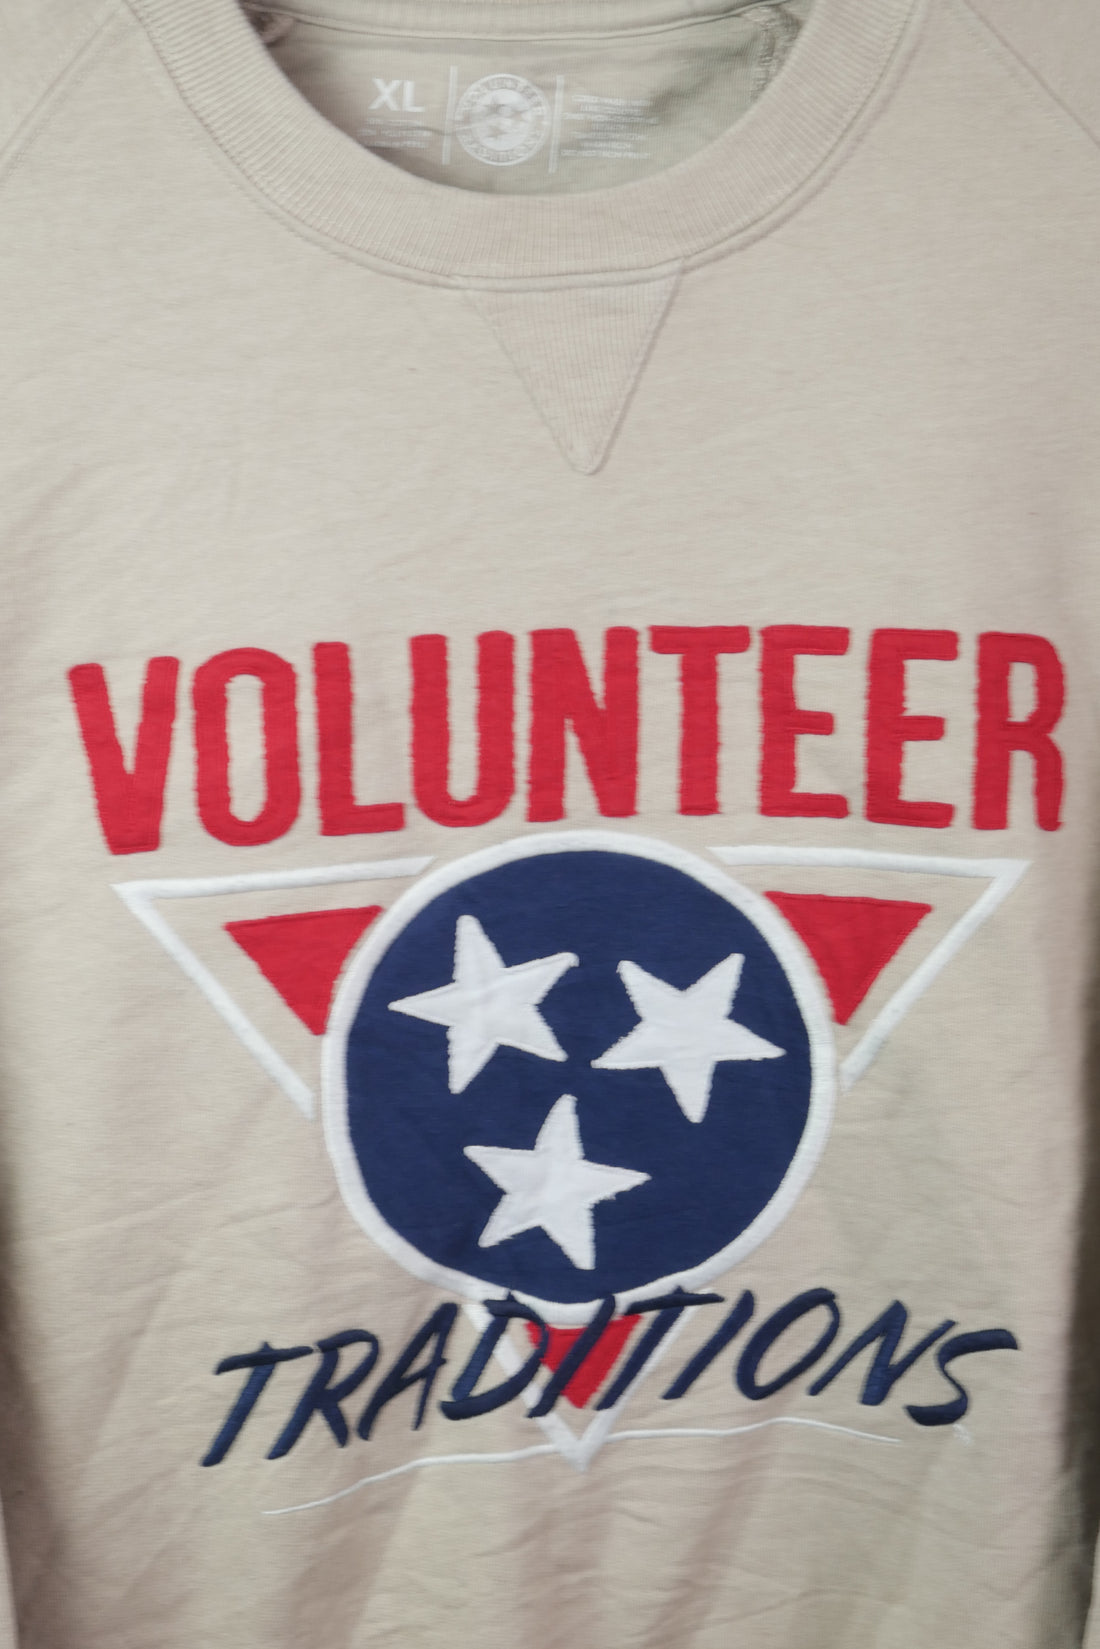 The Volunteer Traditions Patch Sweatshirt (XL)